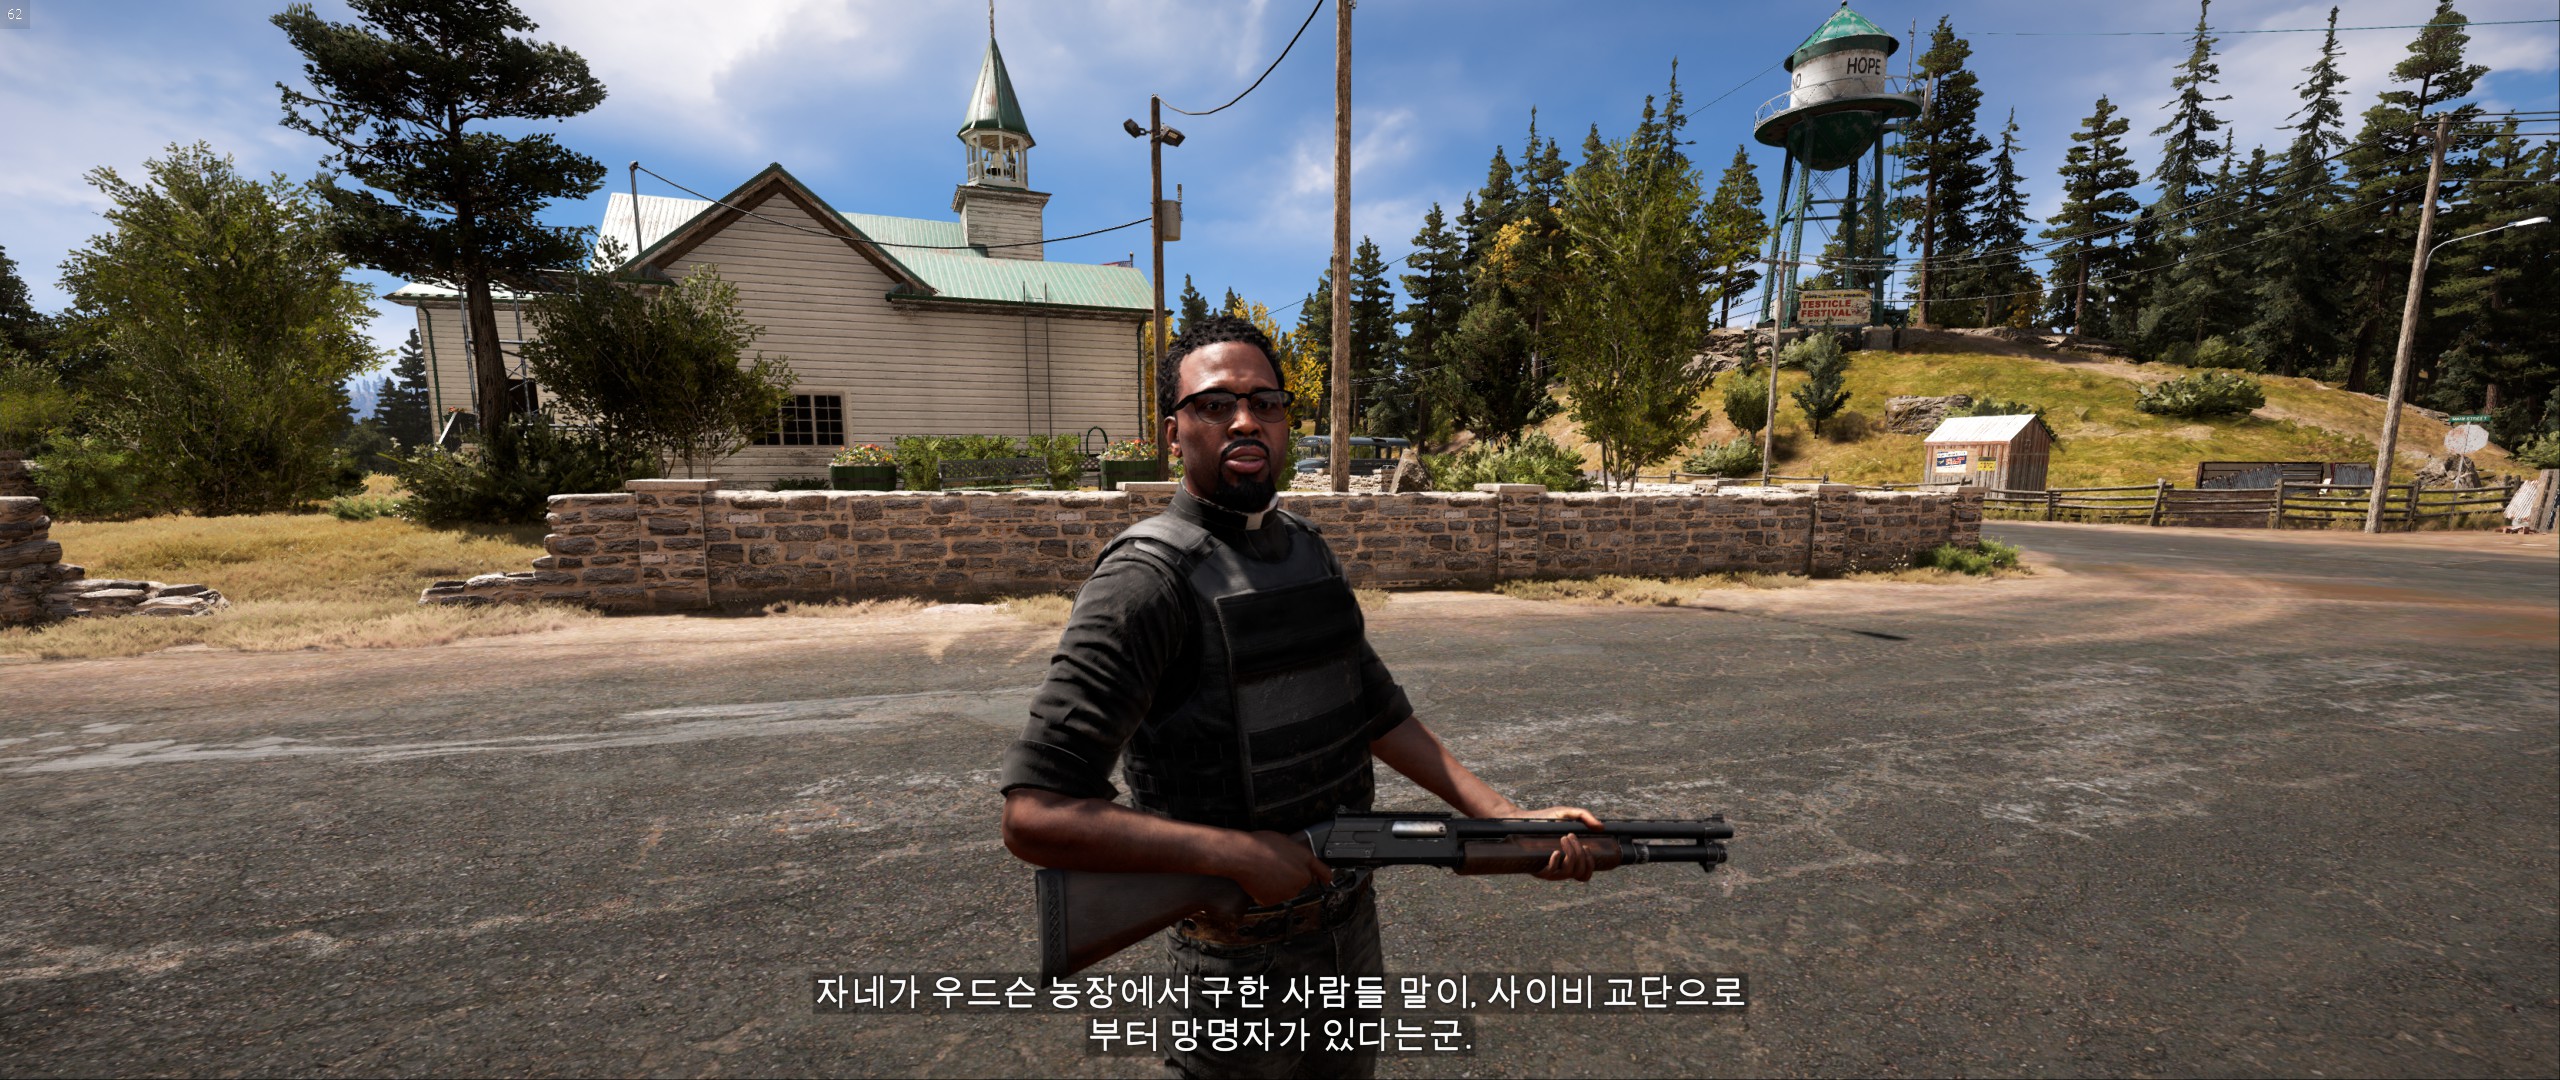 Far Cry 52018-3-28-10-41-59.jpg